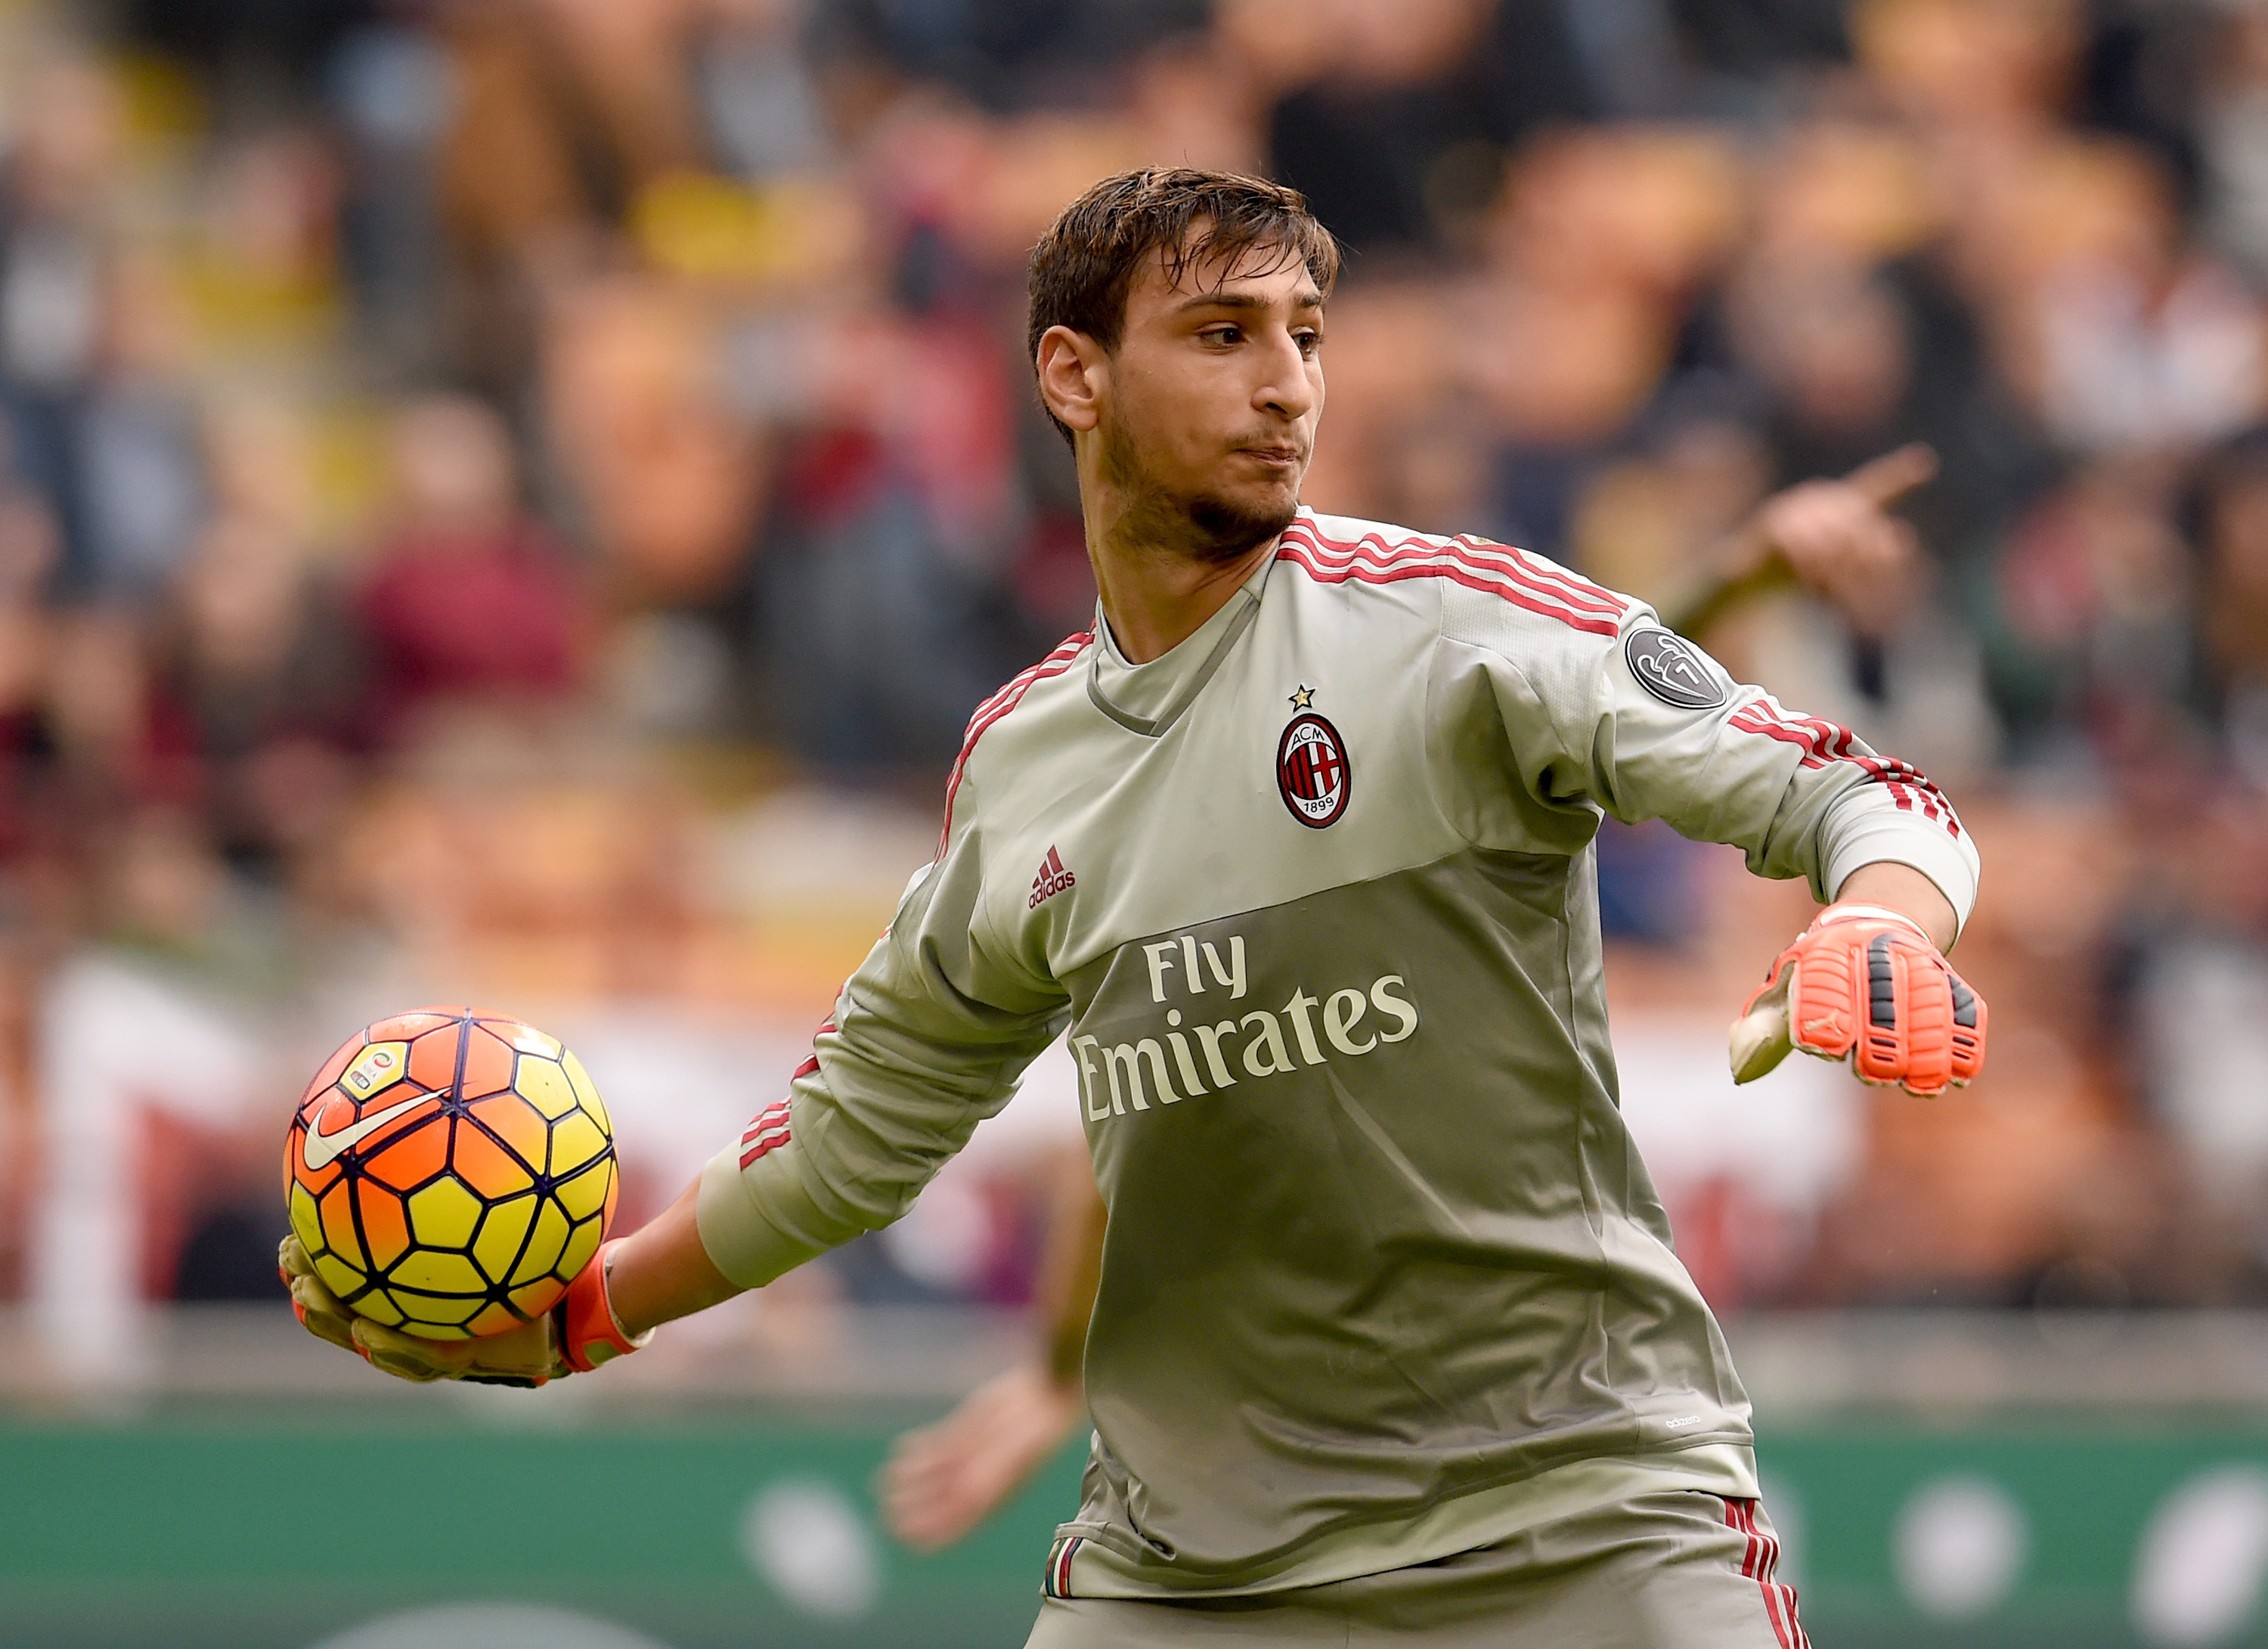 16-годишен вратар дебютира за Милан при победата с 2:1 над Сасуоло